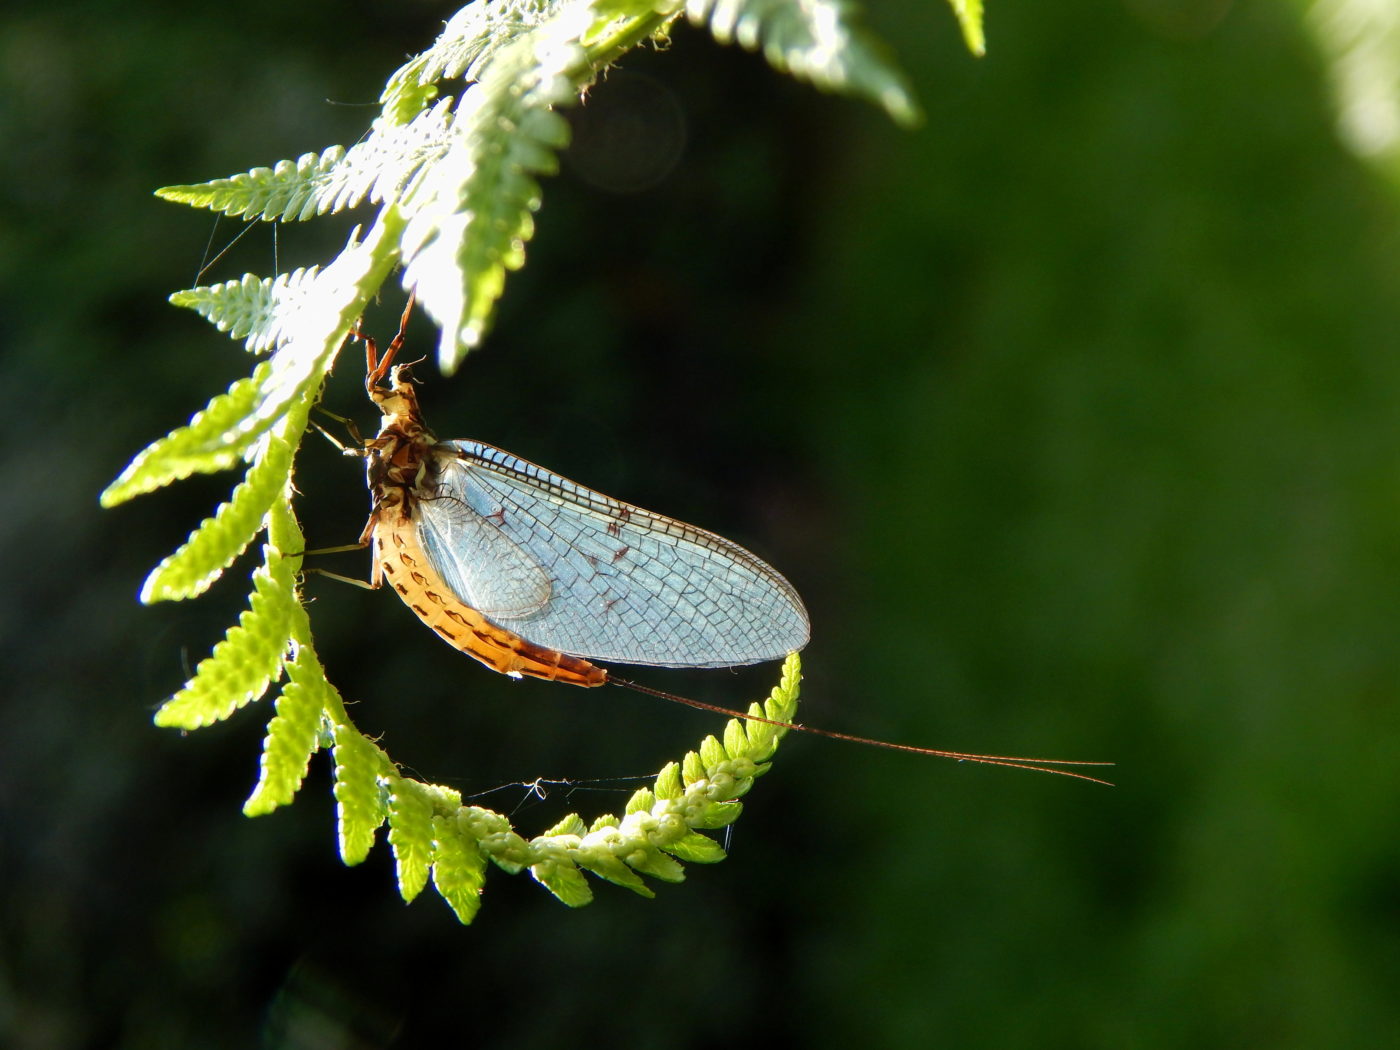 Mayfly on an unfurled fern frond